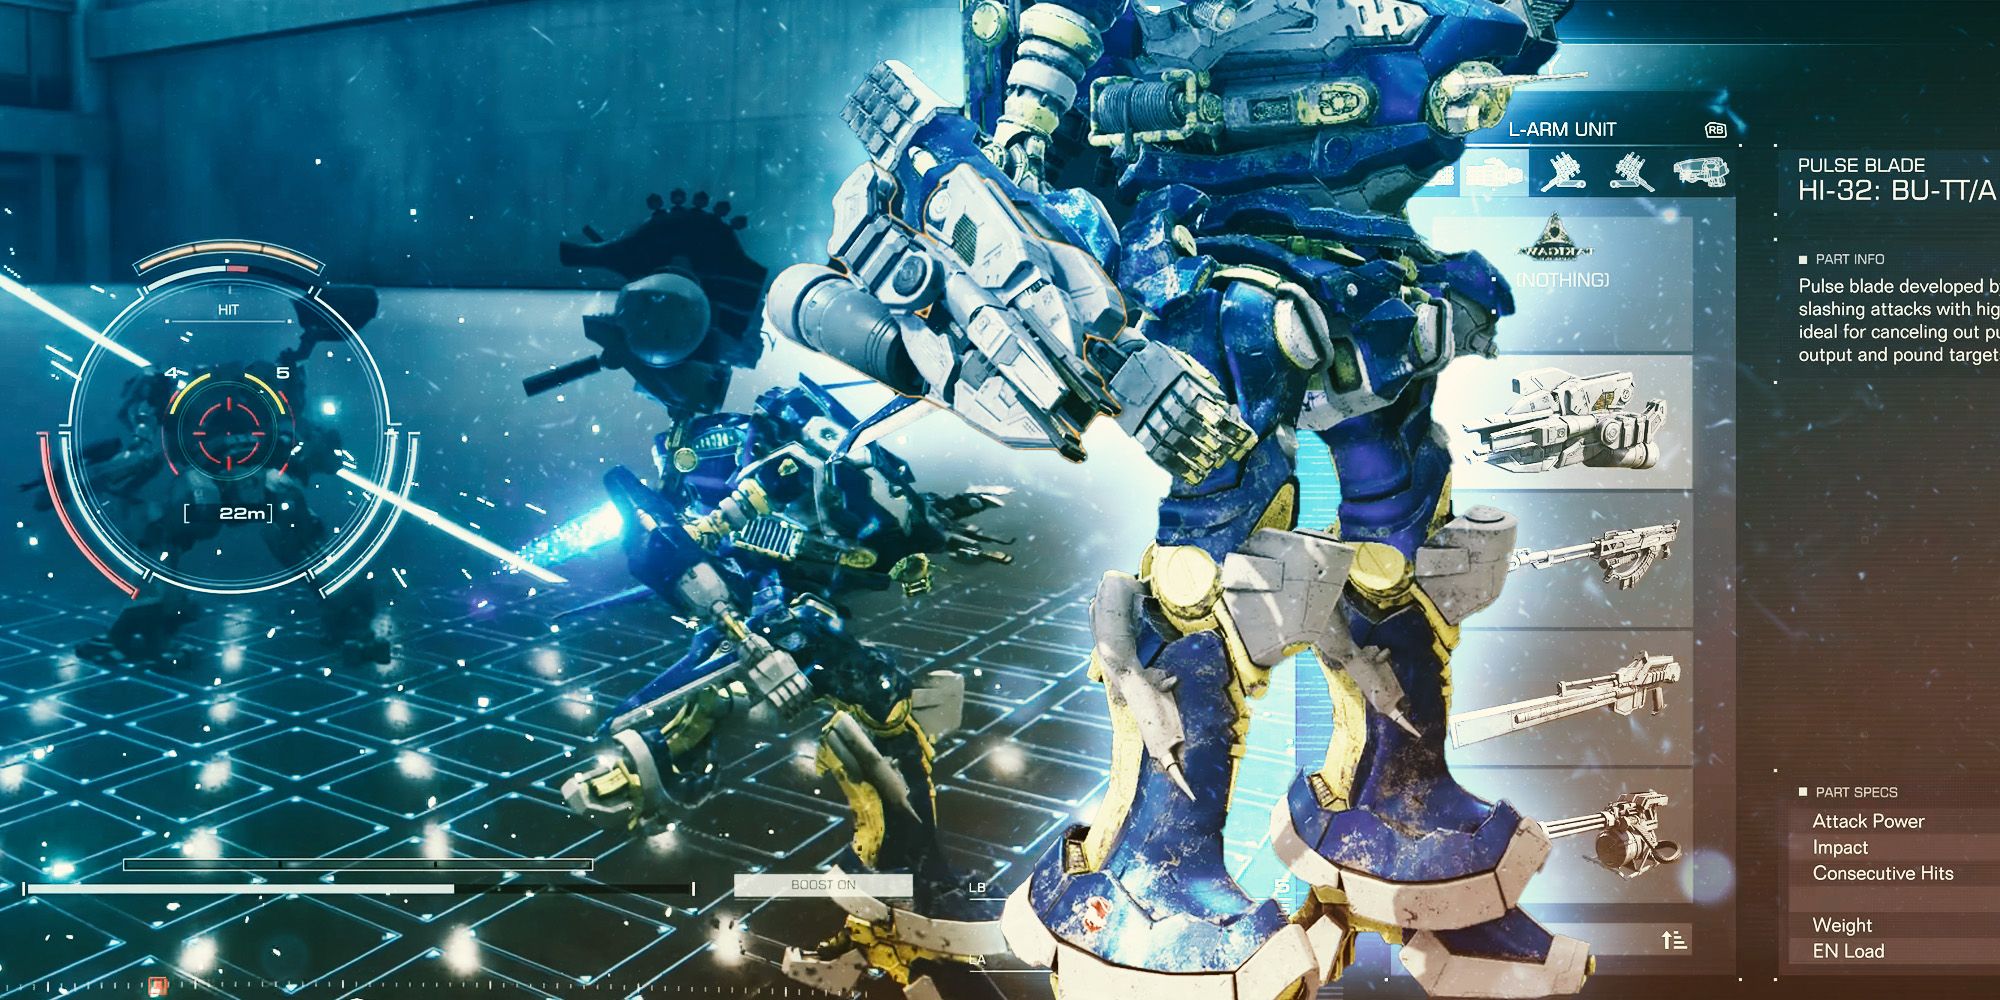 Armored Core release time: When it unlocks in your region